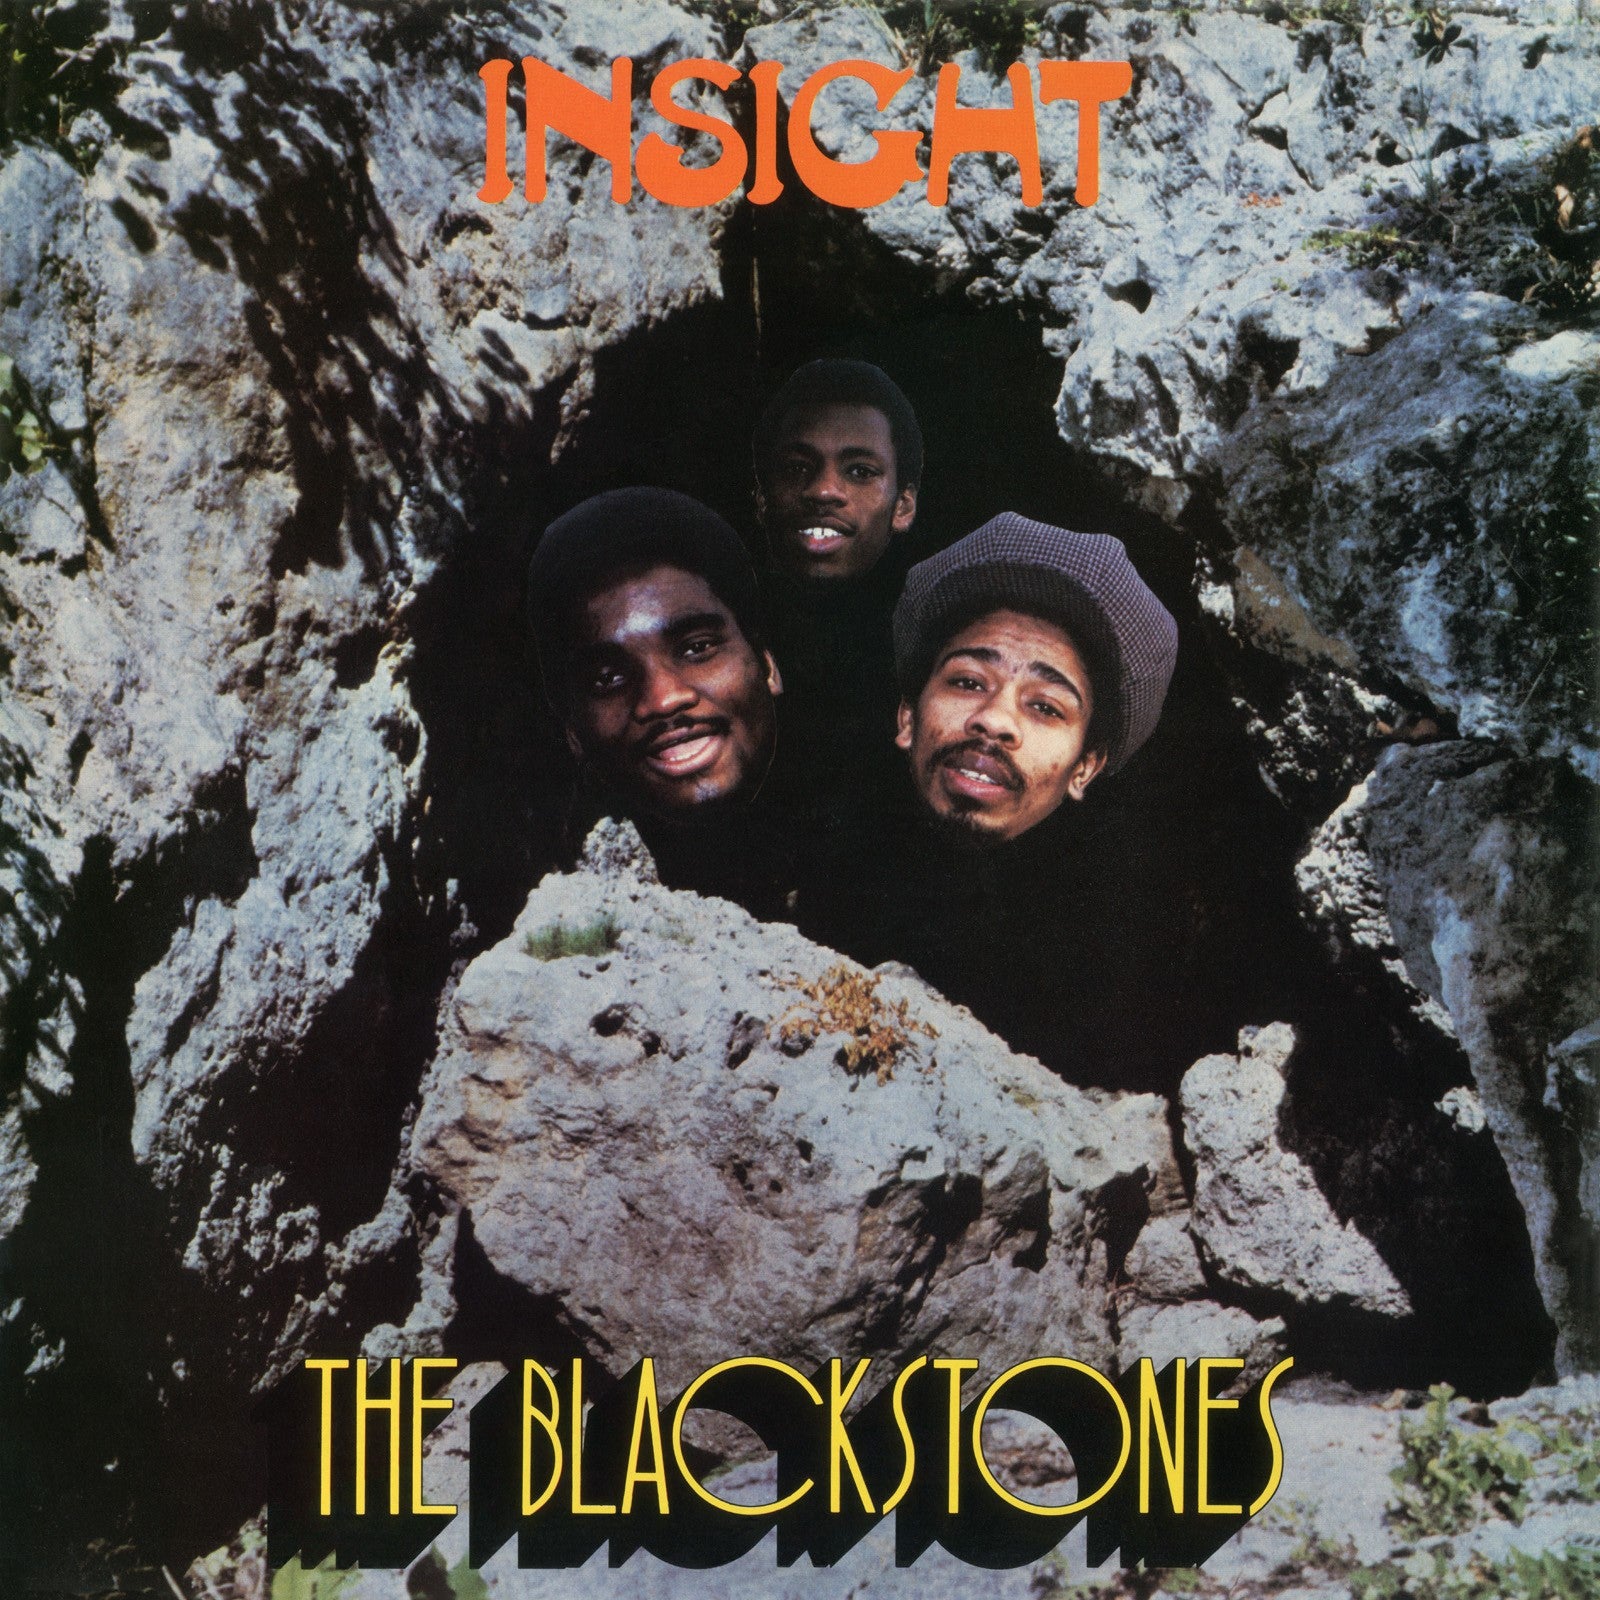 The Blackstones - Insight - Vinyl LP - Secret Records Limited